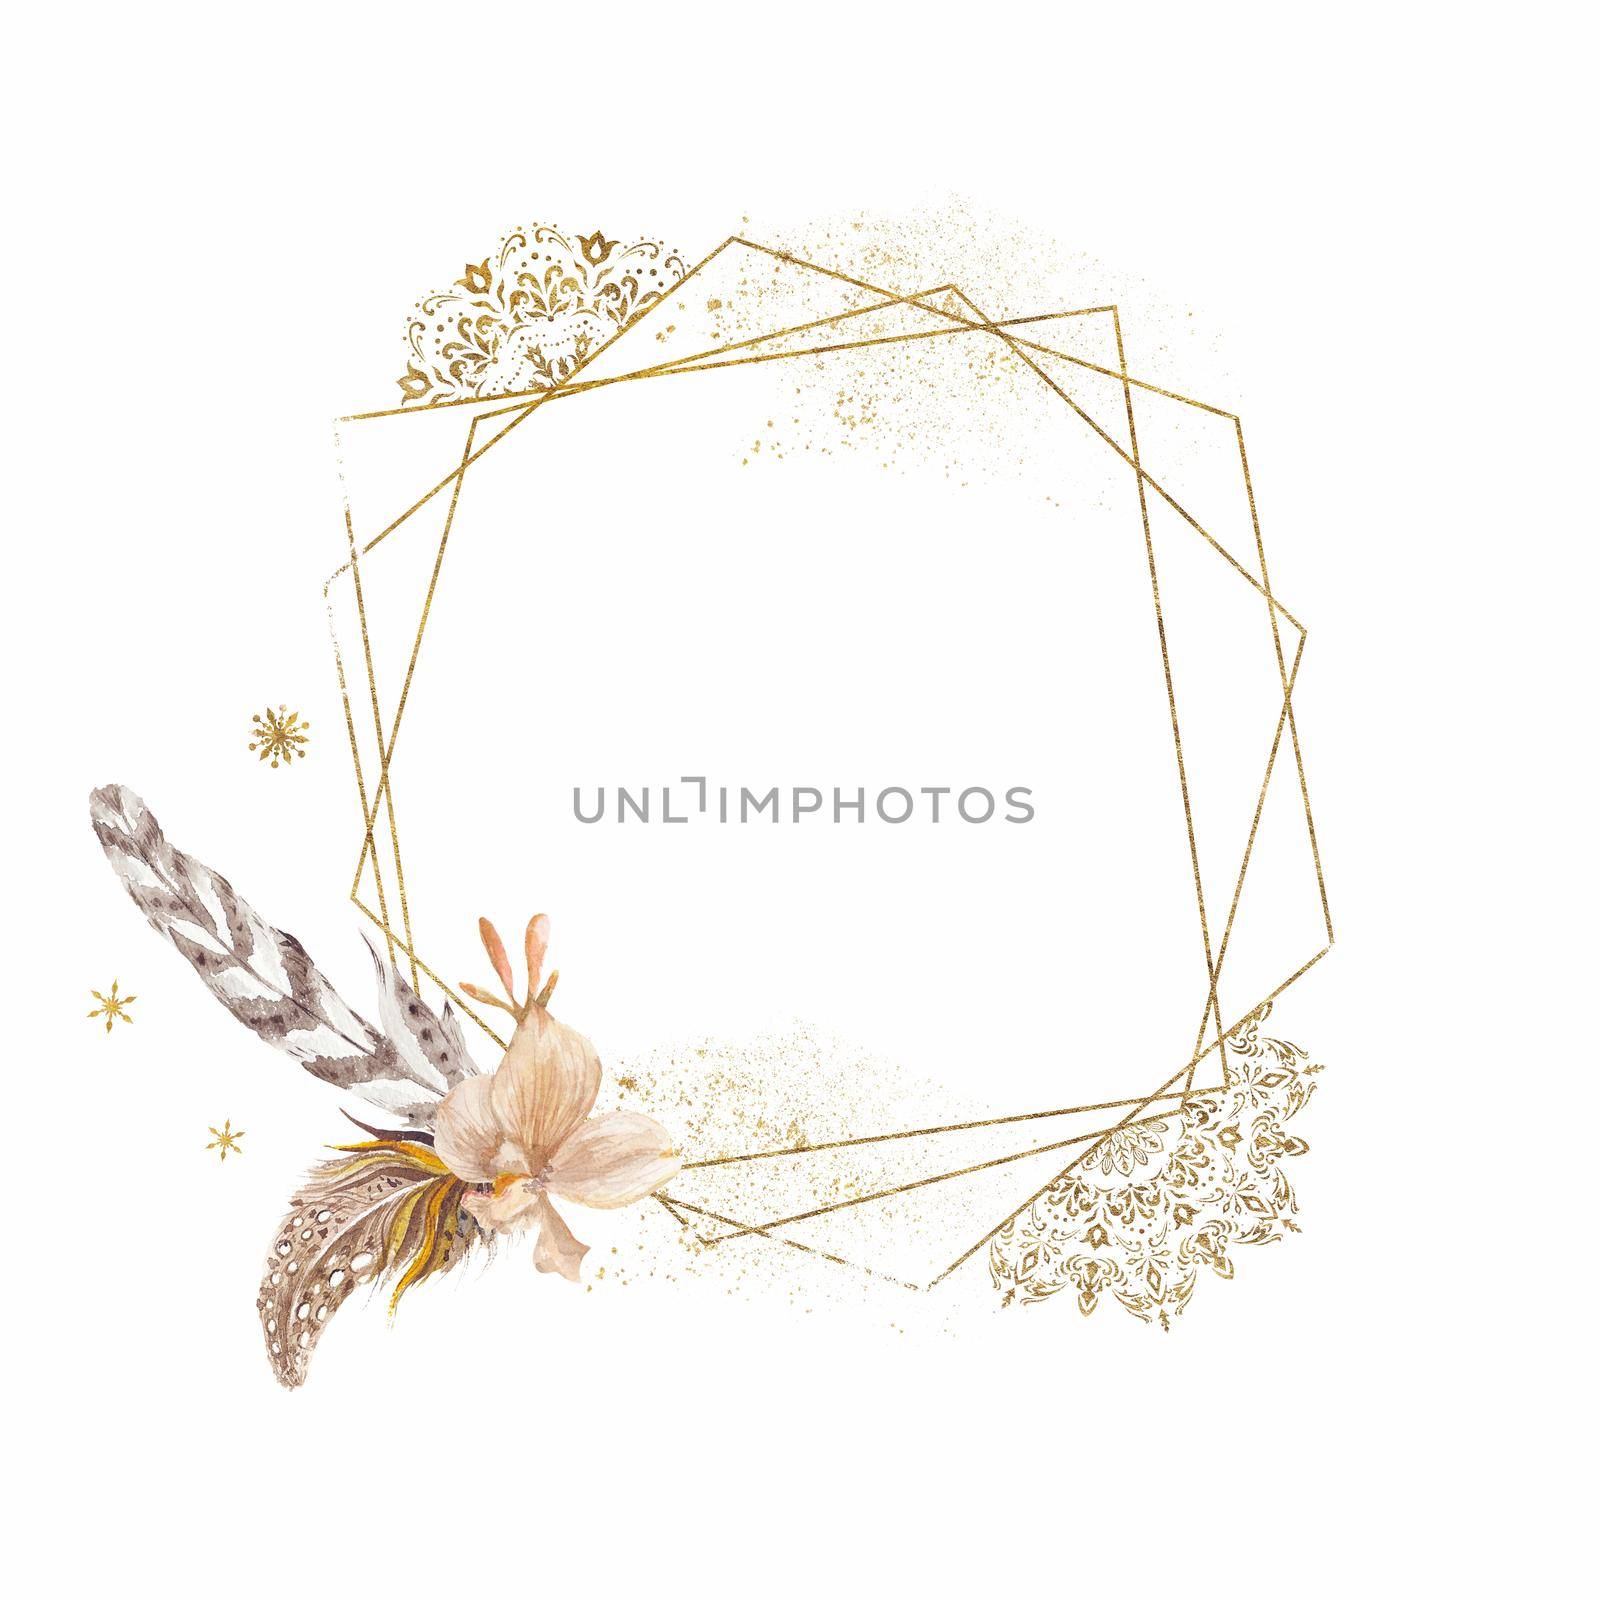 Romantic spring frame illustration background for festive design